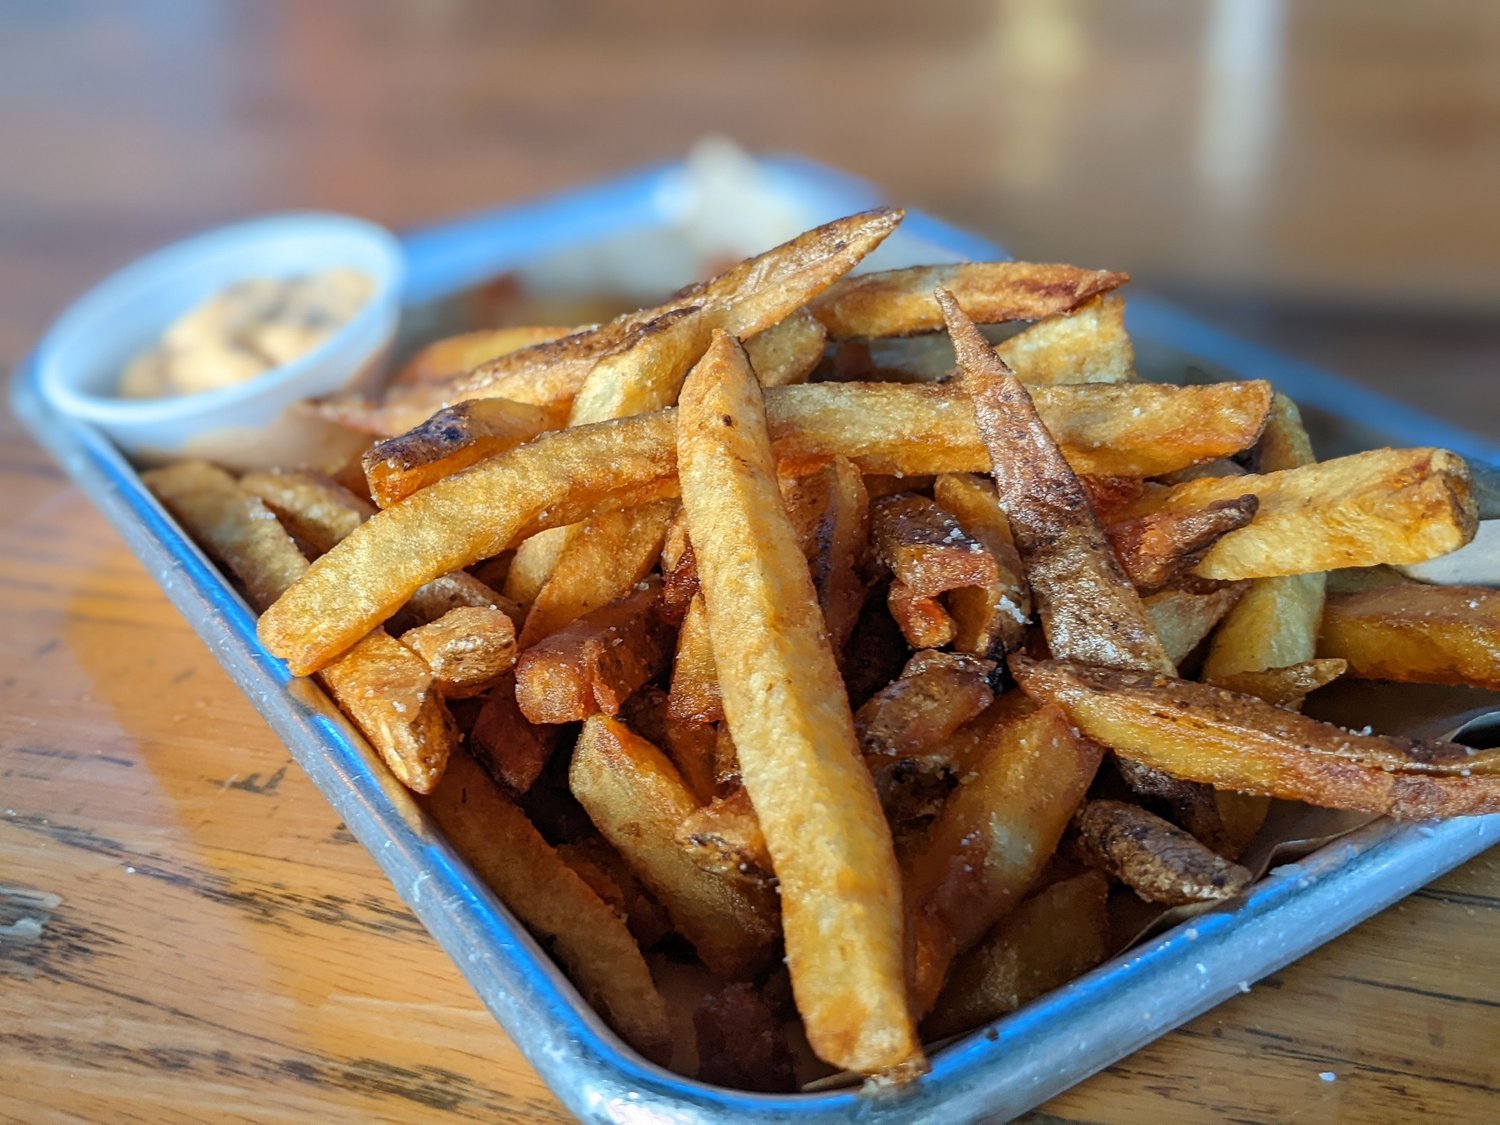 The Taste Bud: Galaxie’s hand-cut fries make a small meal